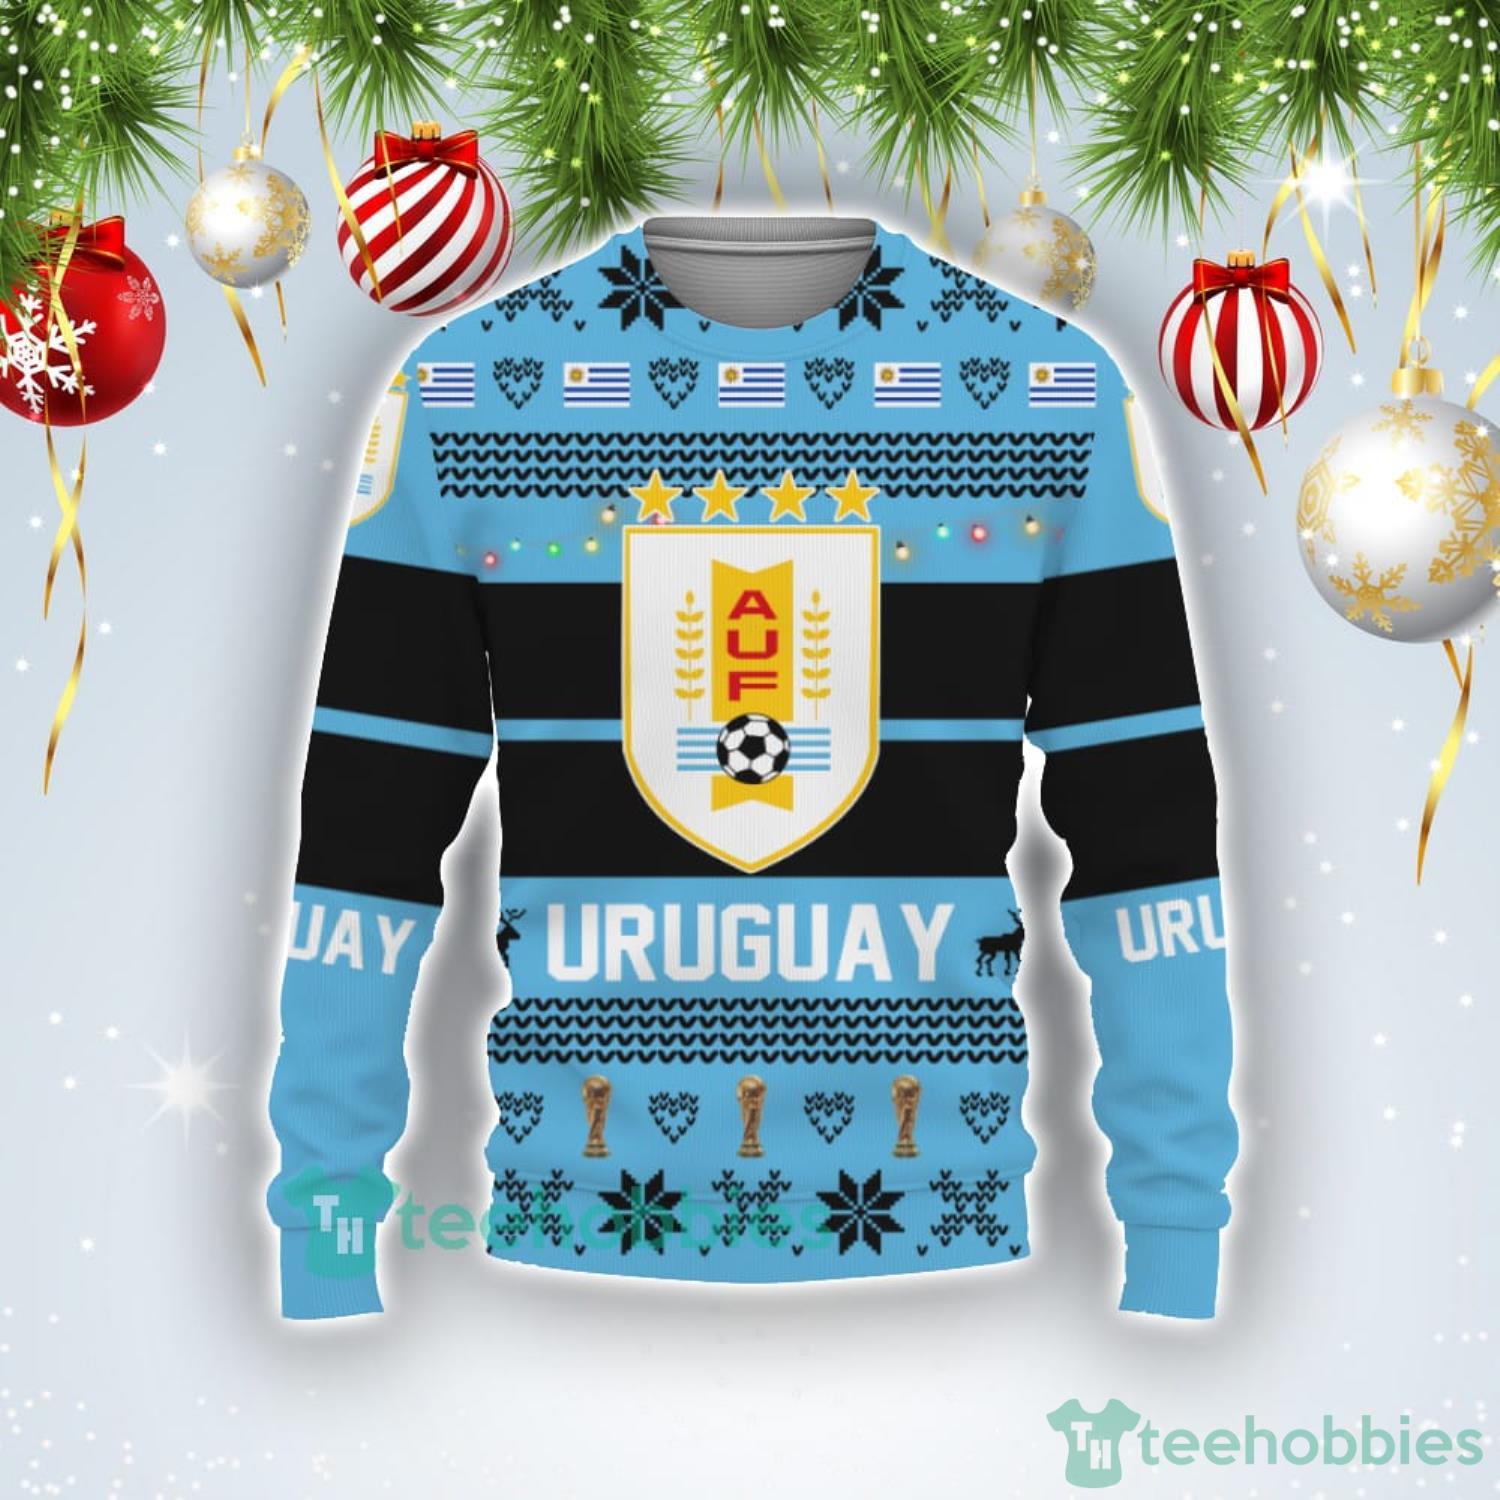 Uruguay National Team Qatar World Cup 2022 Merry Christmas Ugly Christmas Sweater Product Photo 1